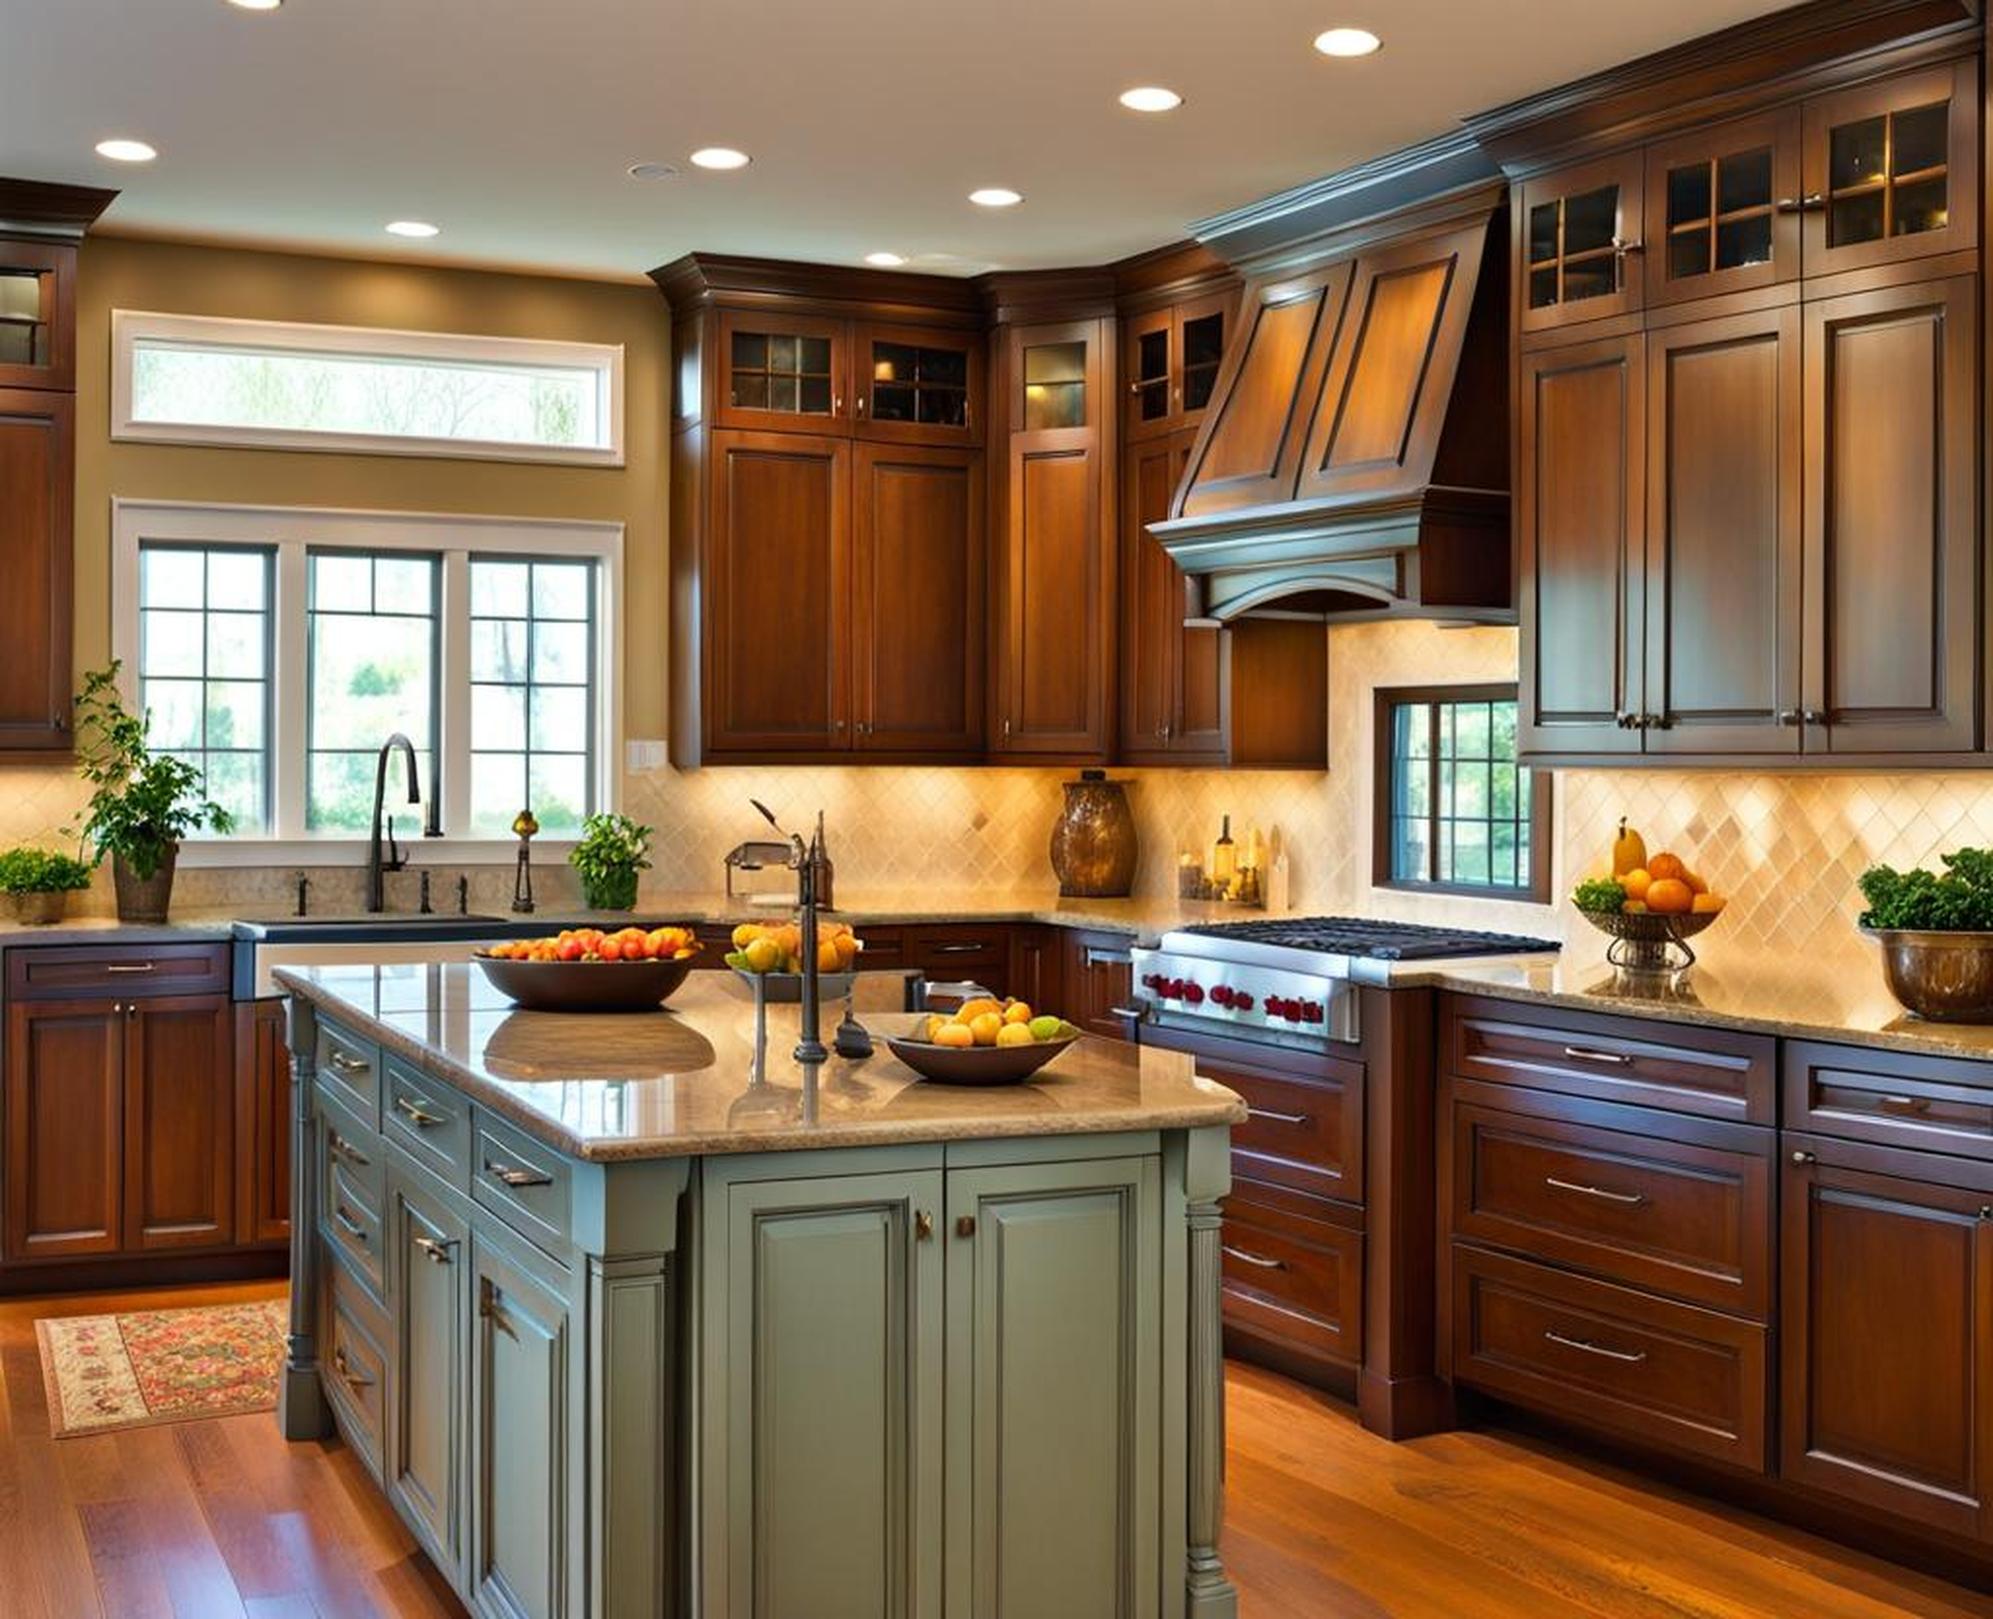 should kitchen cabinets be lighter or darker than walls